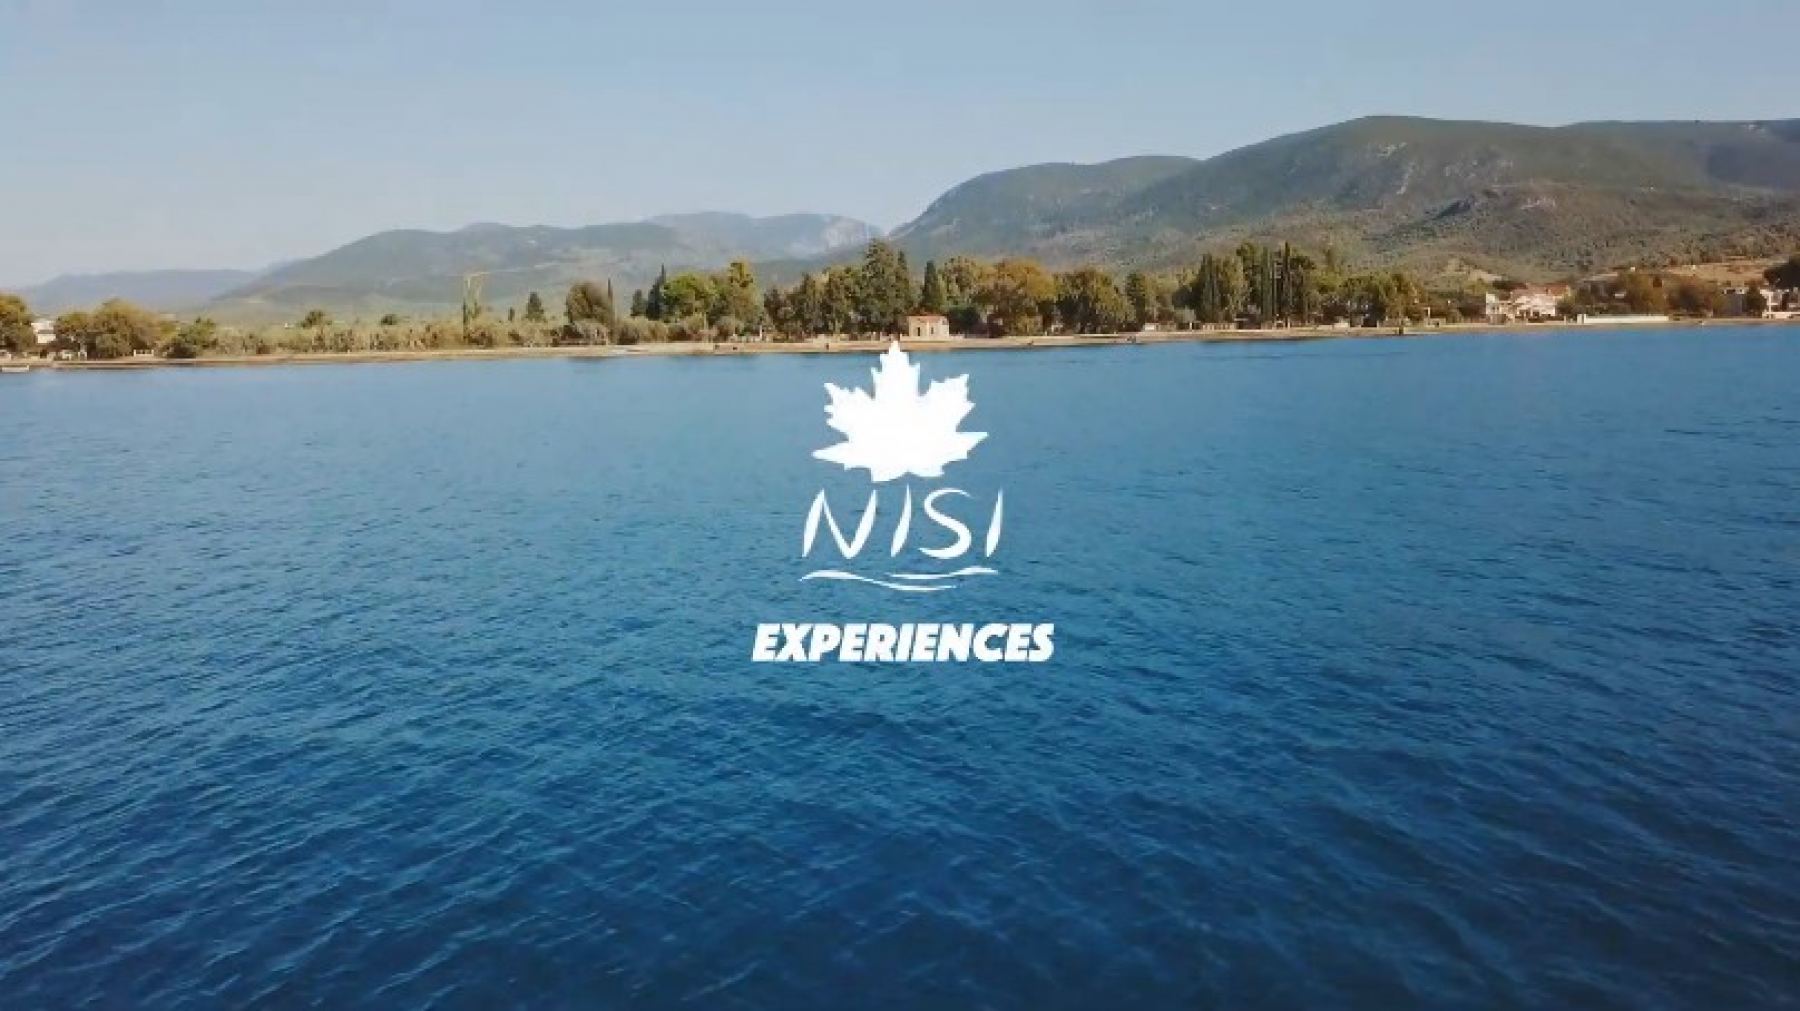 NISI: Εσύ θα ζήσεις ξεχωριστές εμπειρίες μαζί μας;